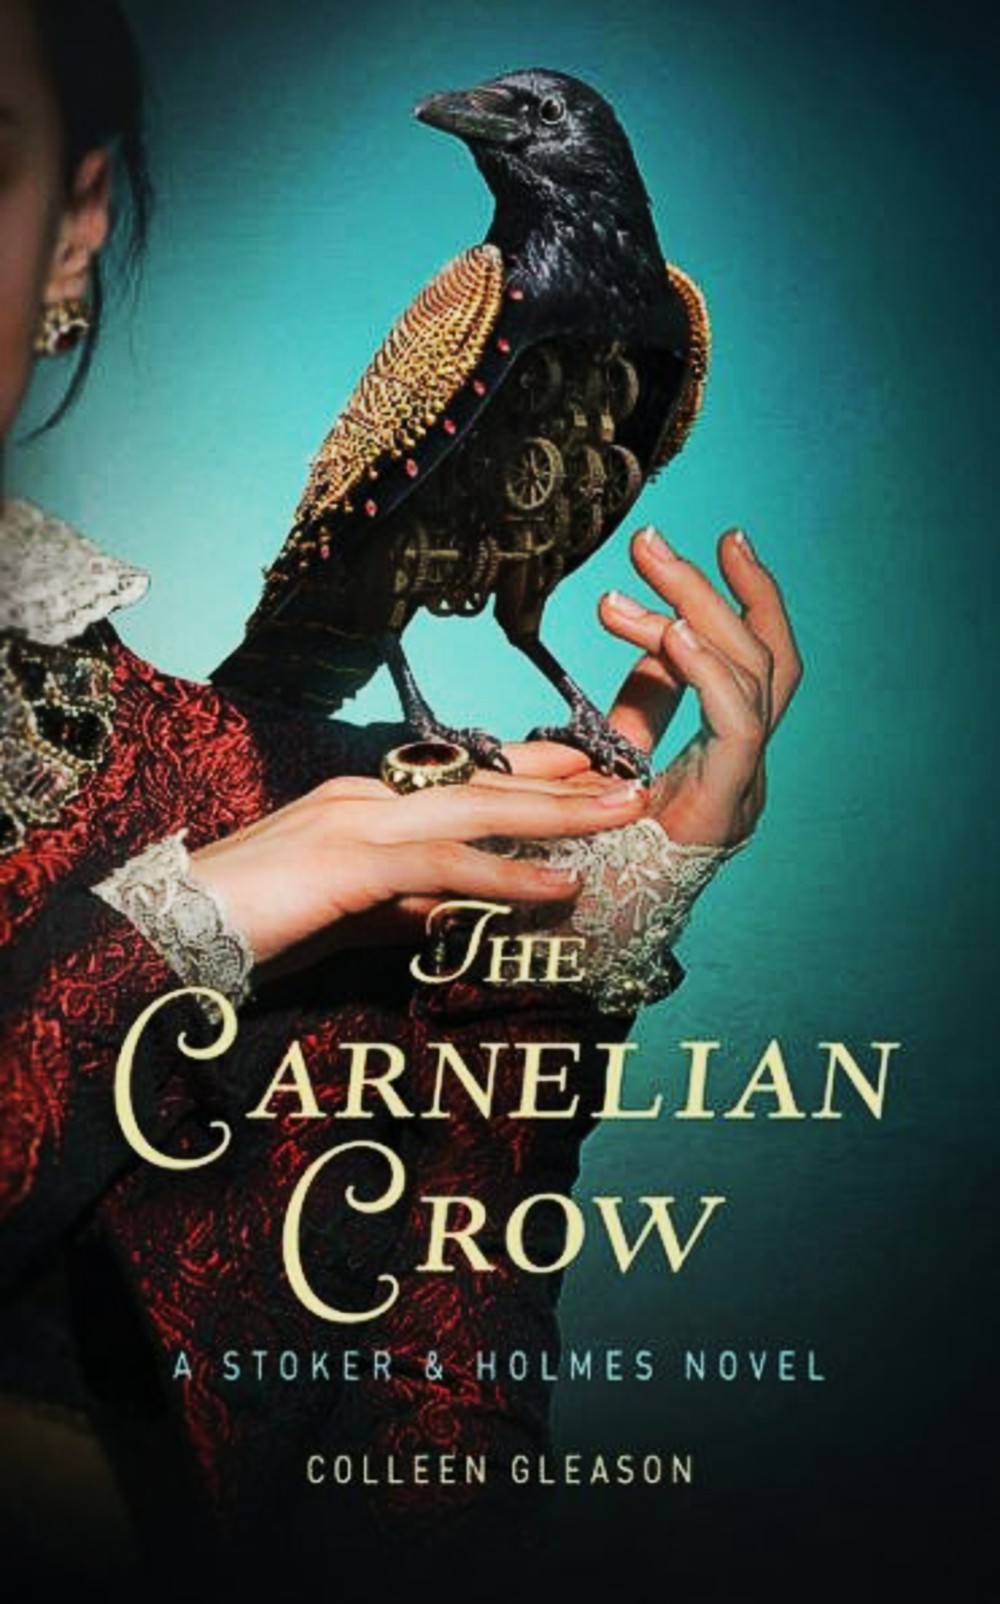 The Carnielian Crow by Colleen Gleason Book Cover.jpg